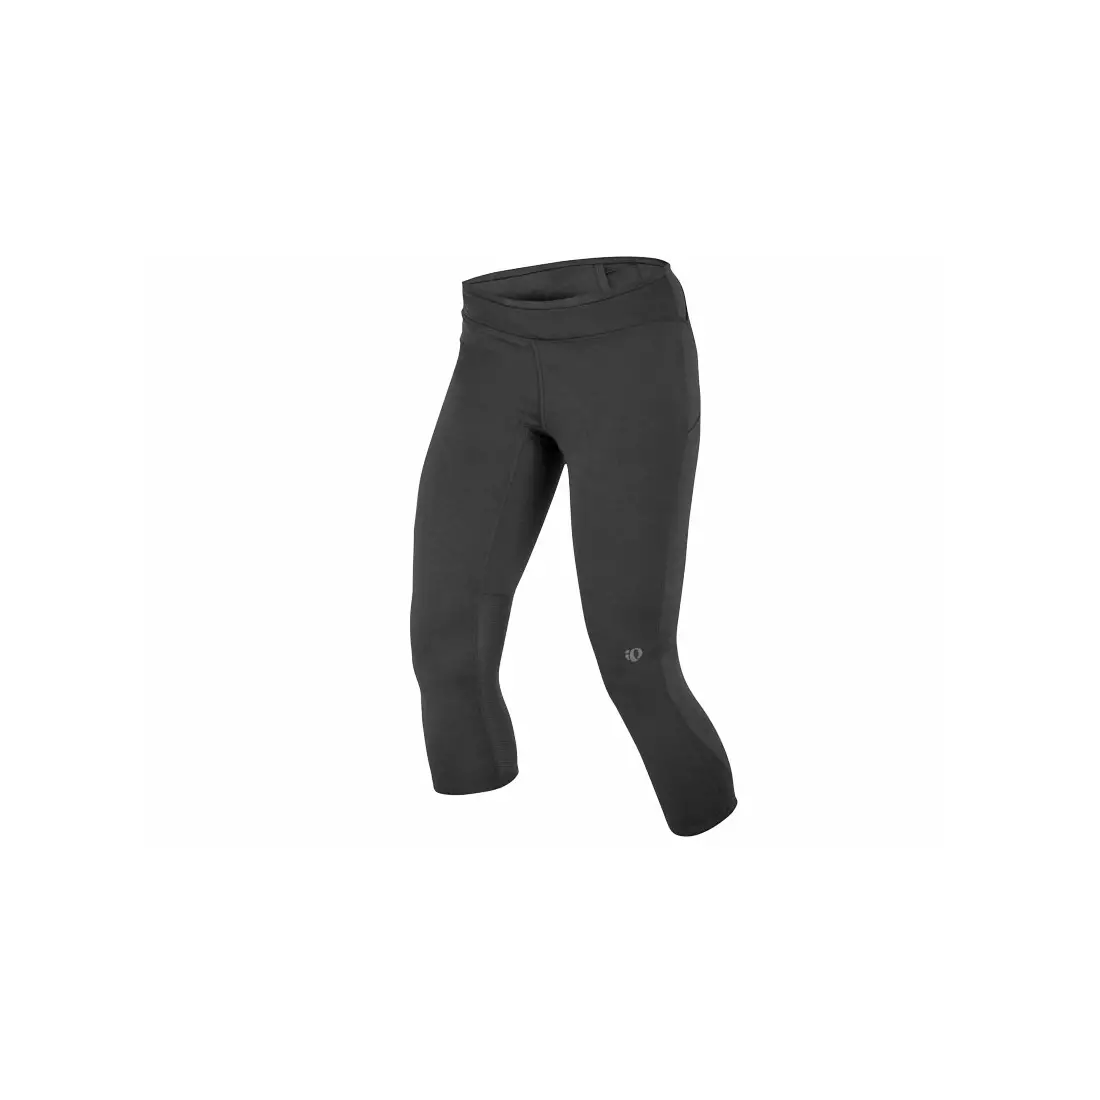 PEARL IZUMI RUN women's running shorts 3/4 ULTRA 12211214-021, color: black